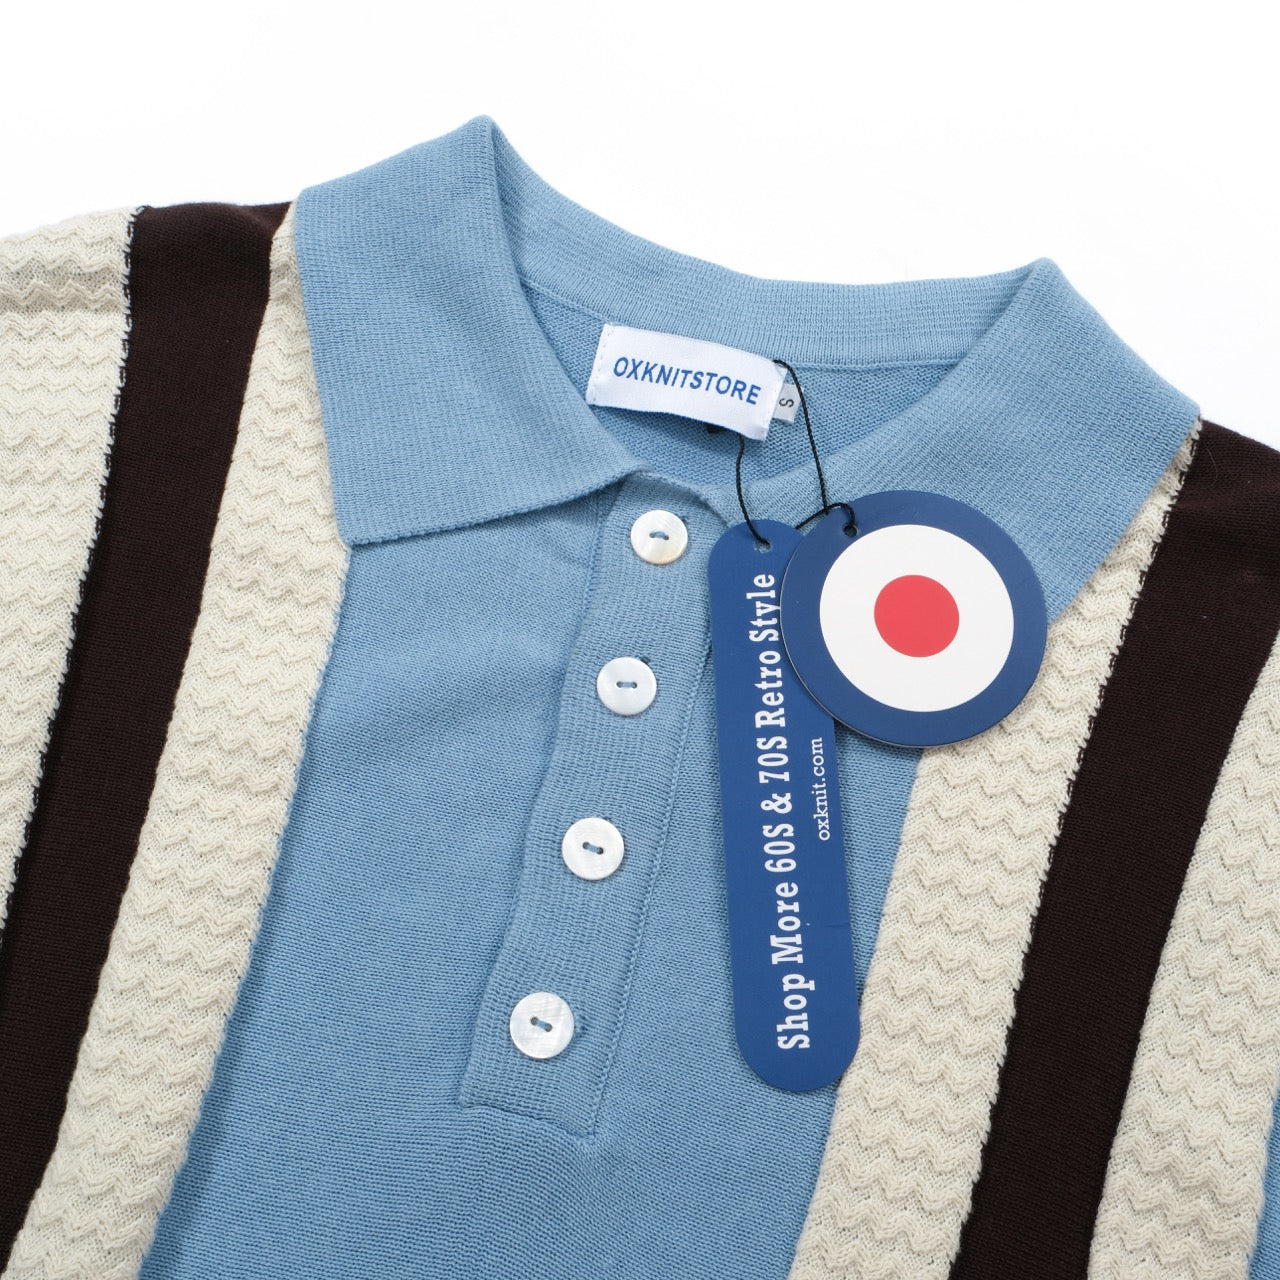 Style Mod – Polo 1960s Casual Blue Knit OXKnit OXKNIT Men Vintage Clothing Stripe Retro